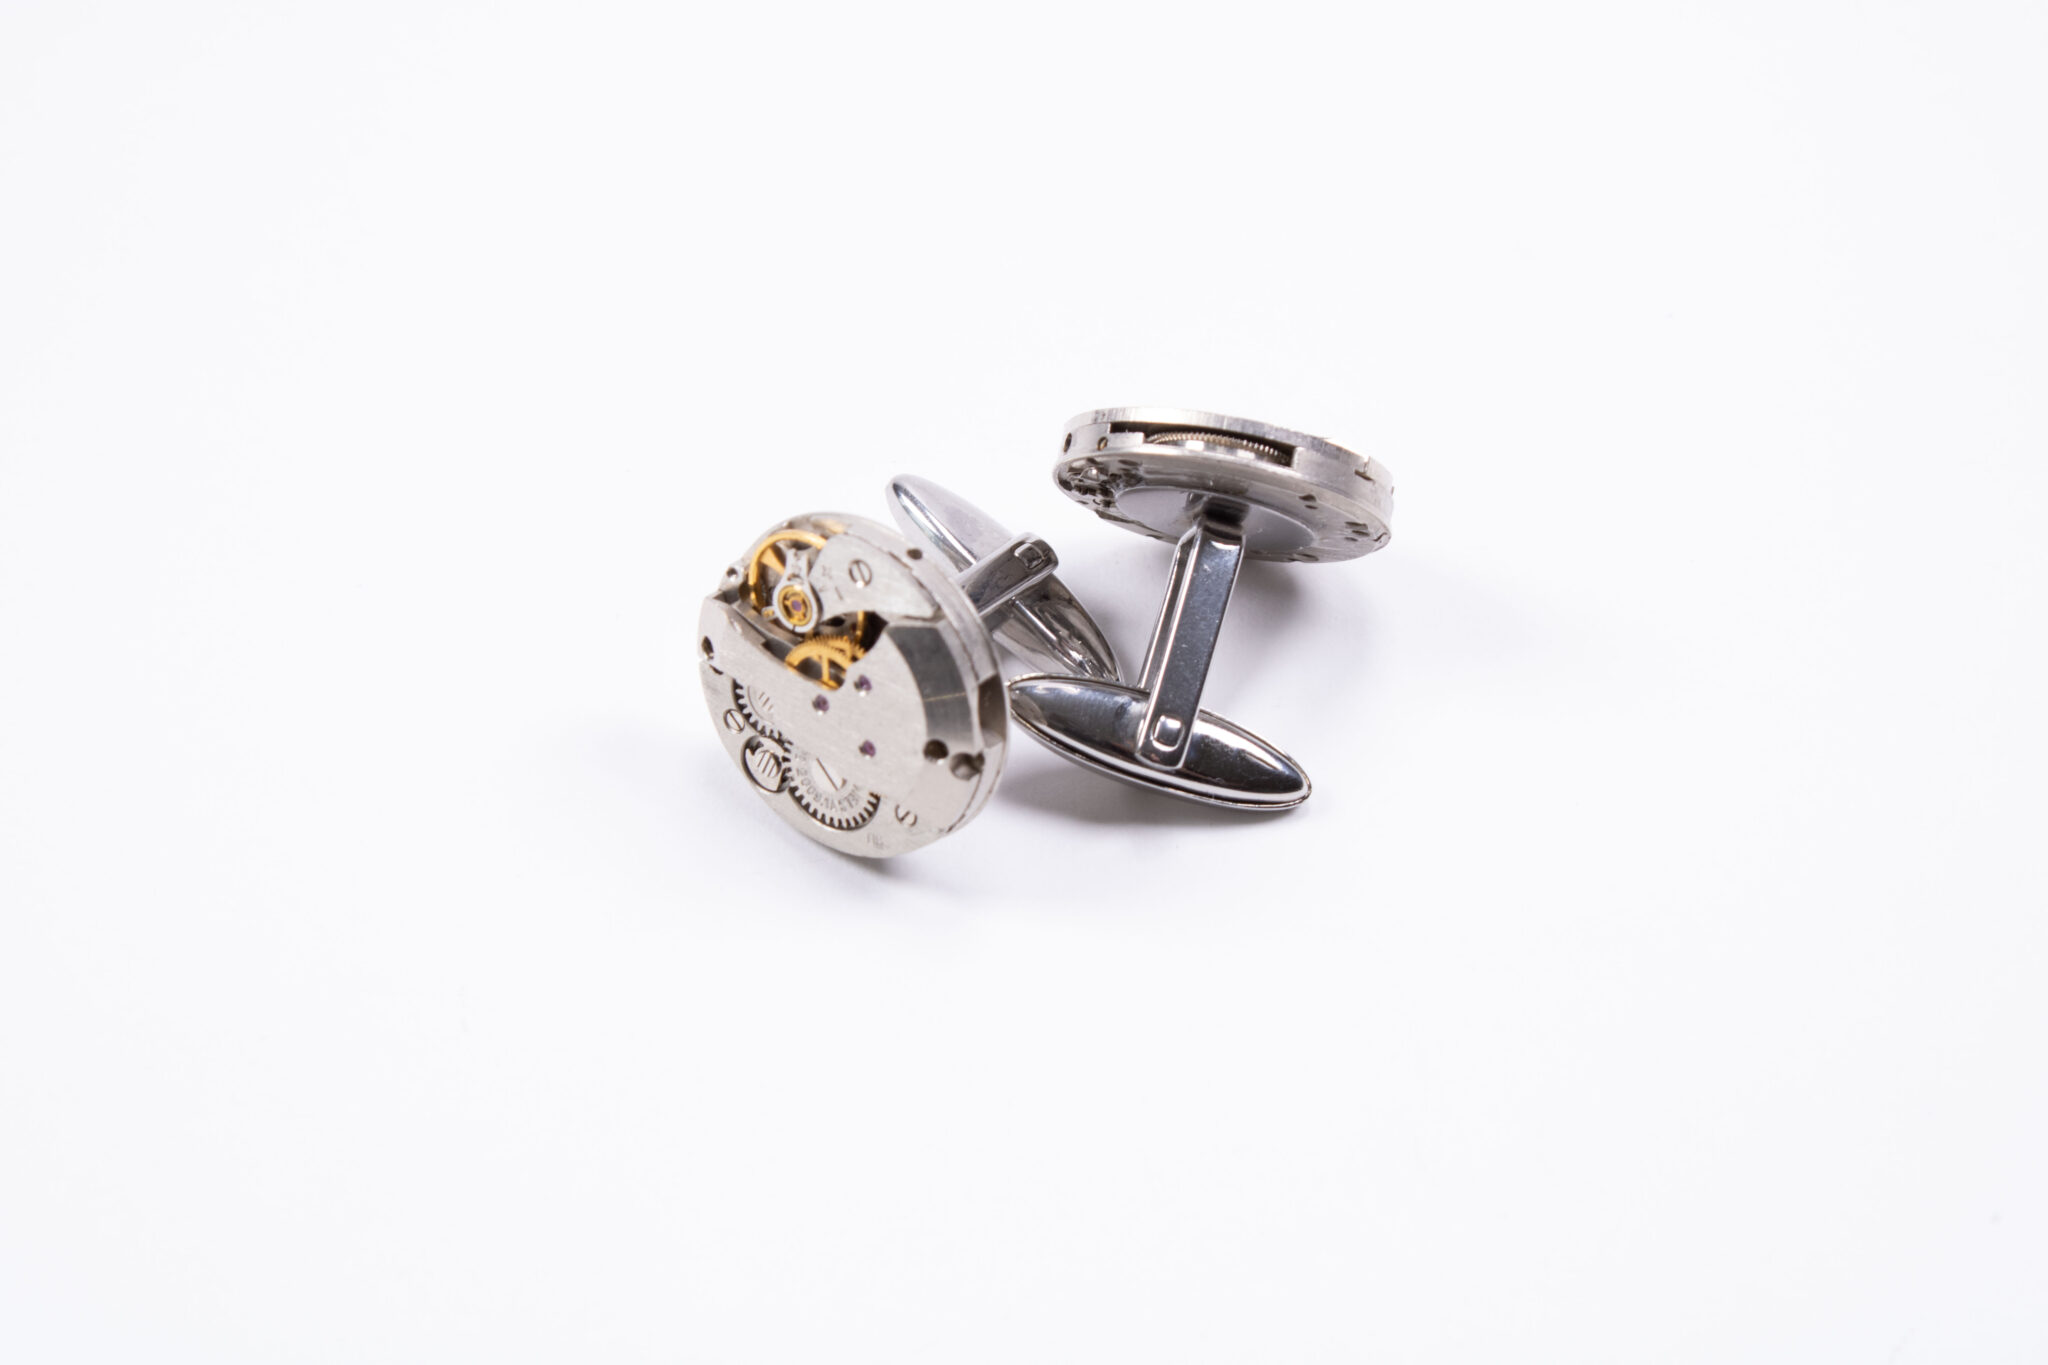 Product image of FredFloris watch mechanism cufflinks